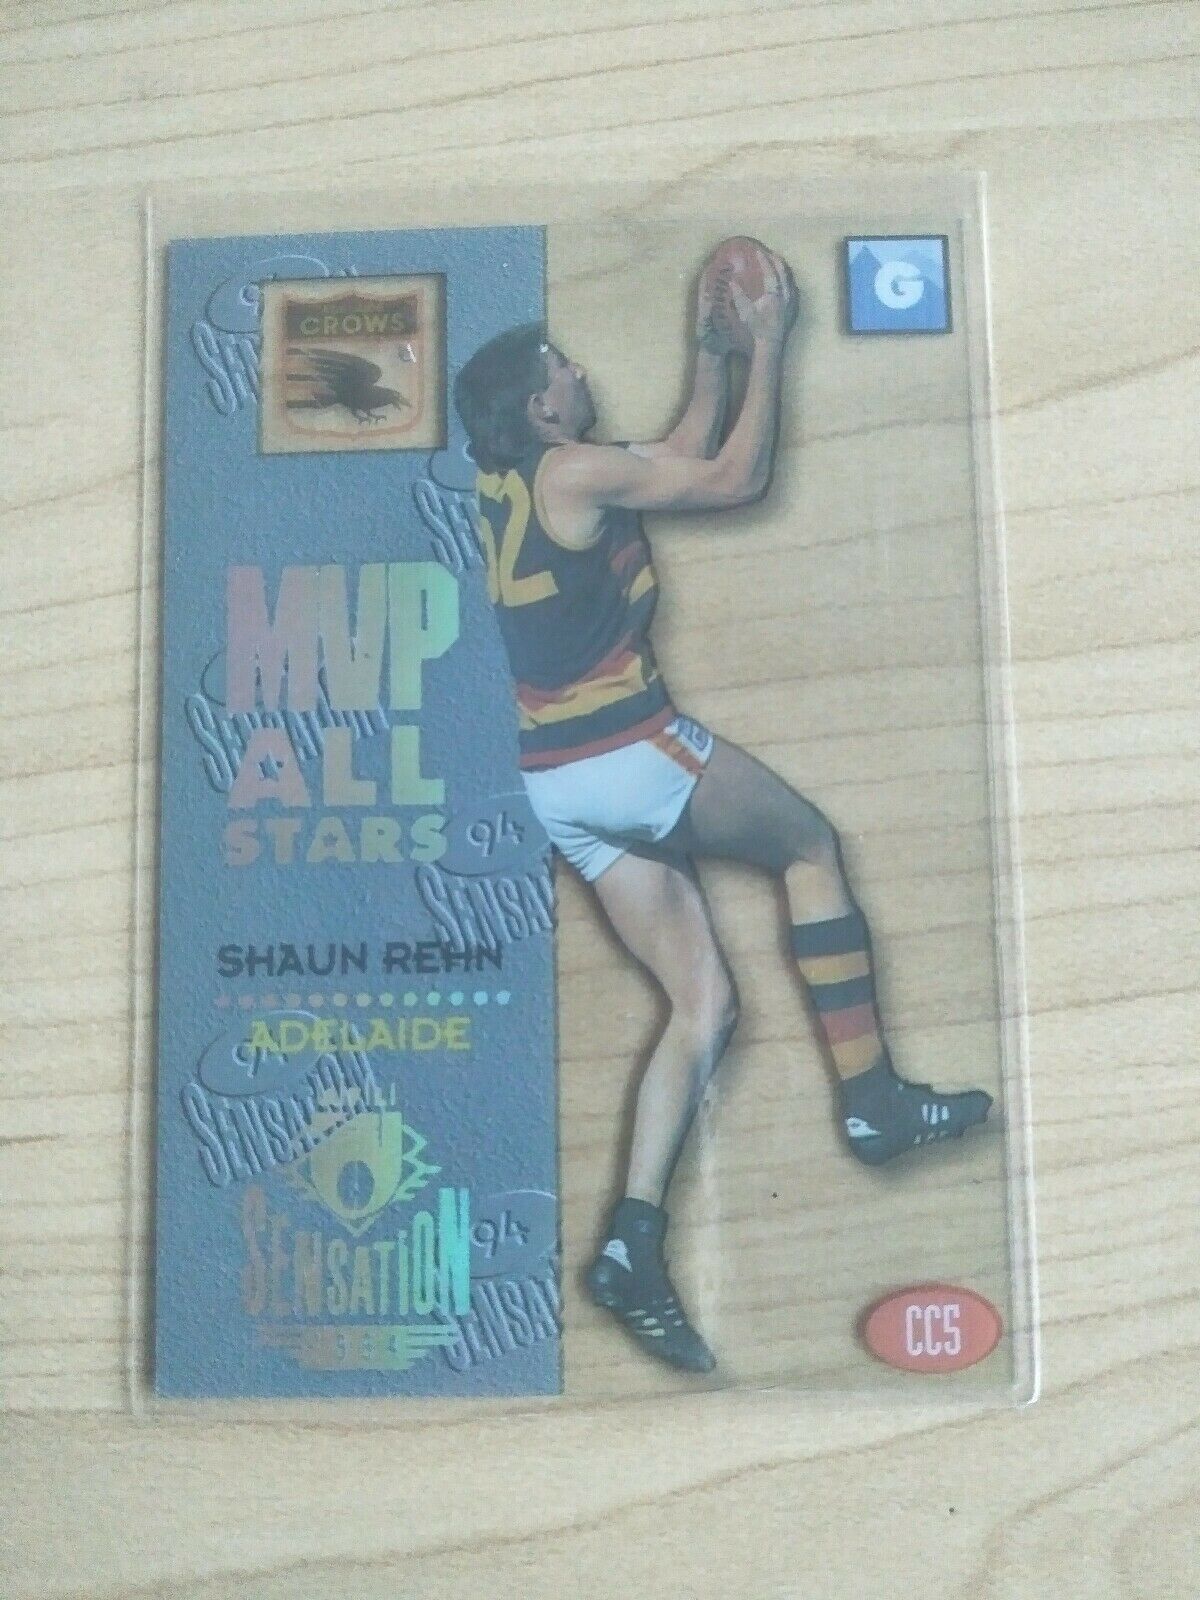 1994 Dynamic Sensation Series MVP Acetate Card Shaun Rehn Adelaide CC5